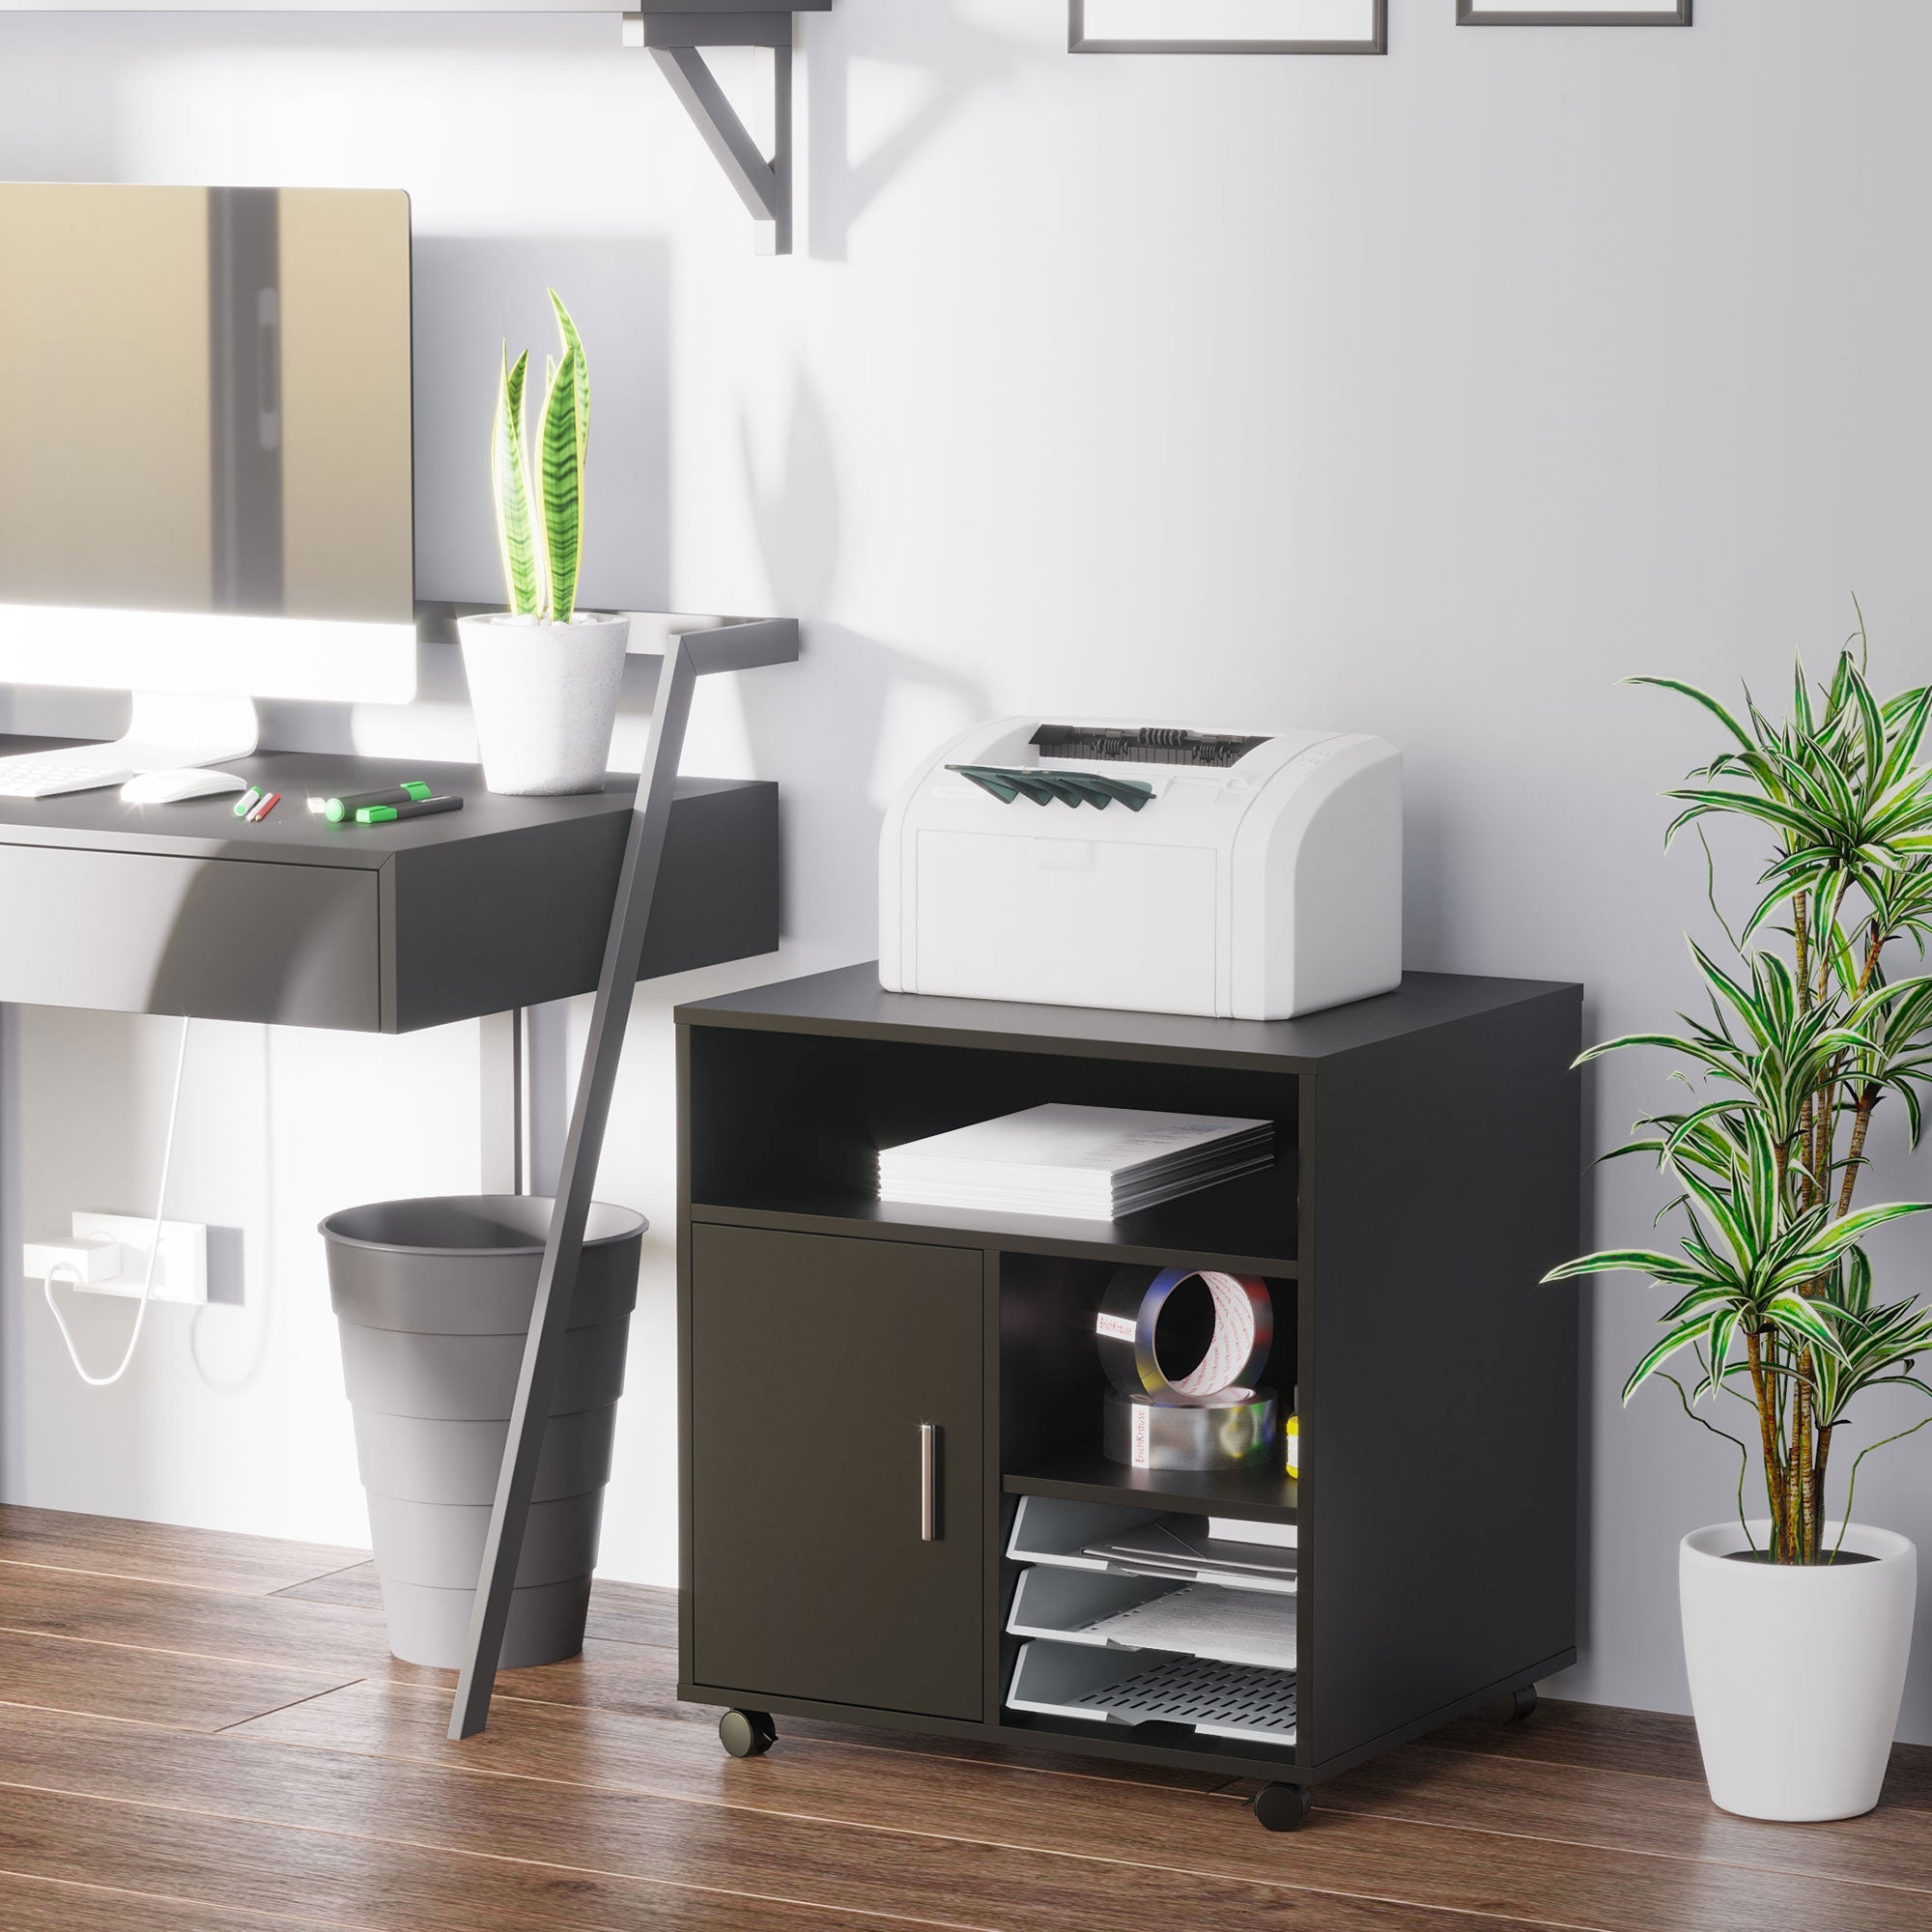 Multi-Storage Printer Stand Unit Office Desk Side Mobile Storage w/ Wheels Modern Style 60L x 50W x 65.5H cm - Black-1